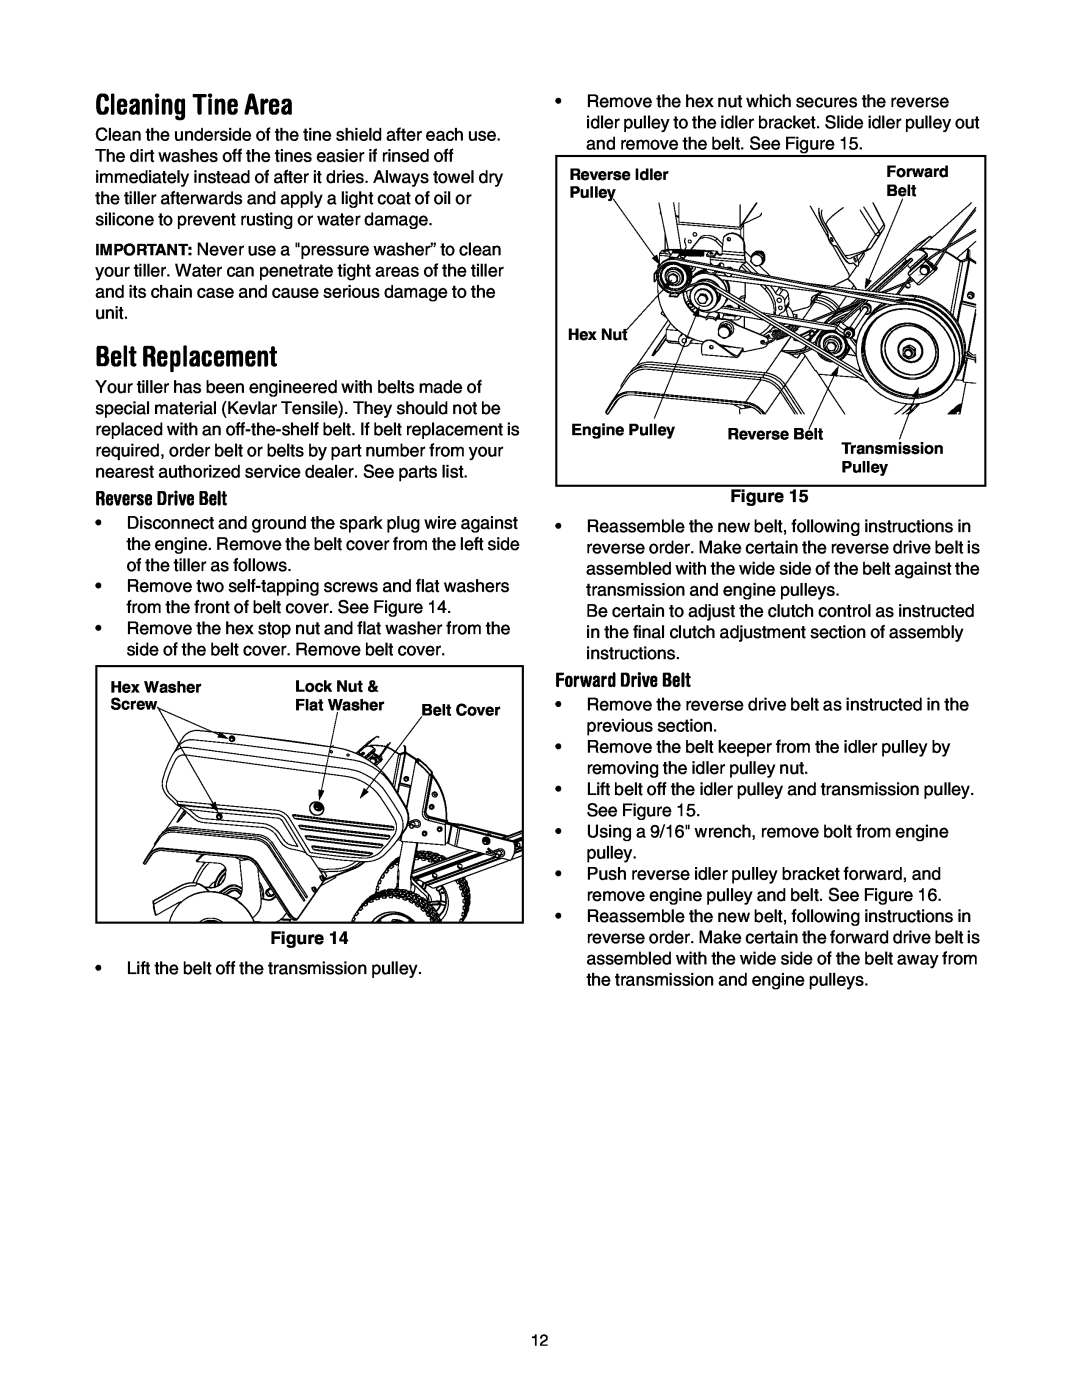 MTD 393 manual Cleaning Tine Area, Belt Replacement, Reverse Drive Belt, Forward Drive Belt 